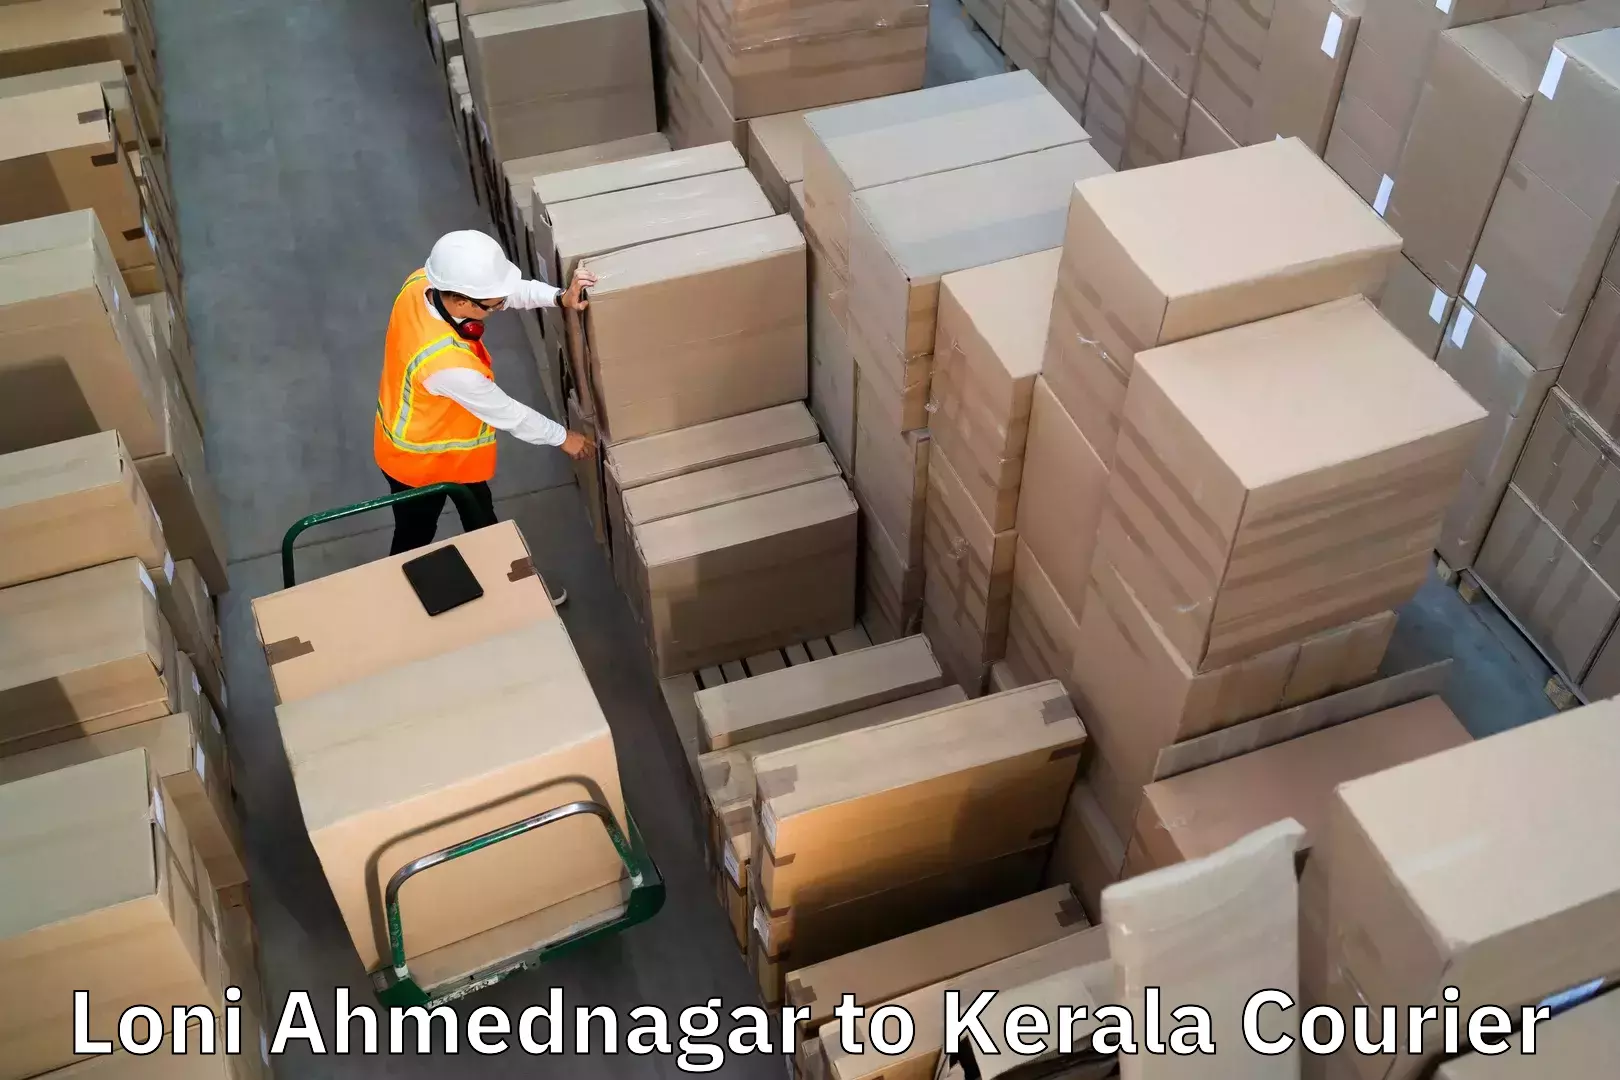 Luggage shipment specialists Loni Ahmednagar to Kottayam